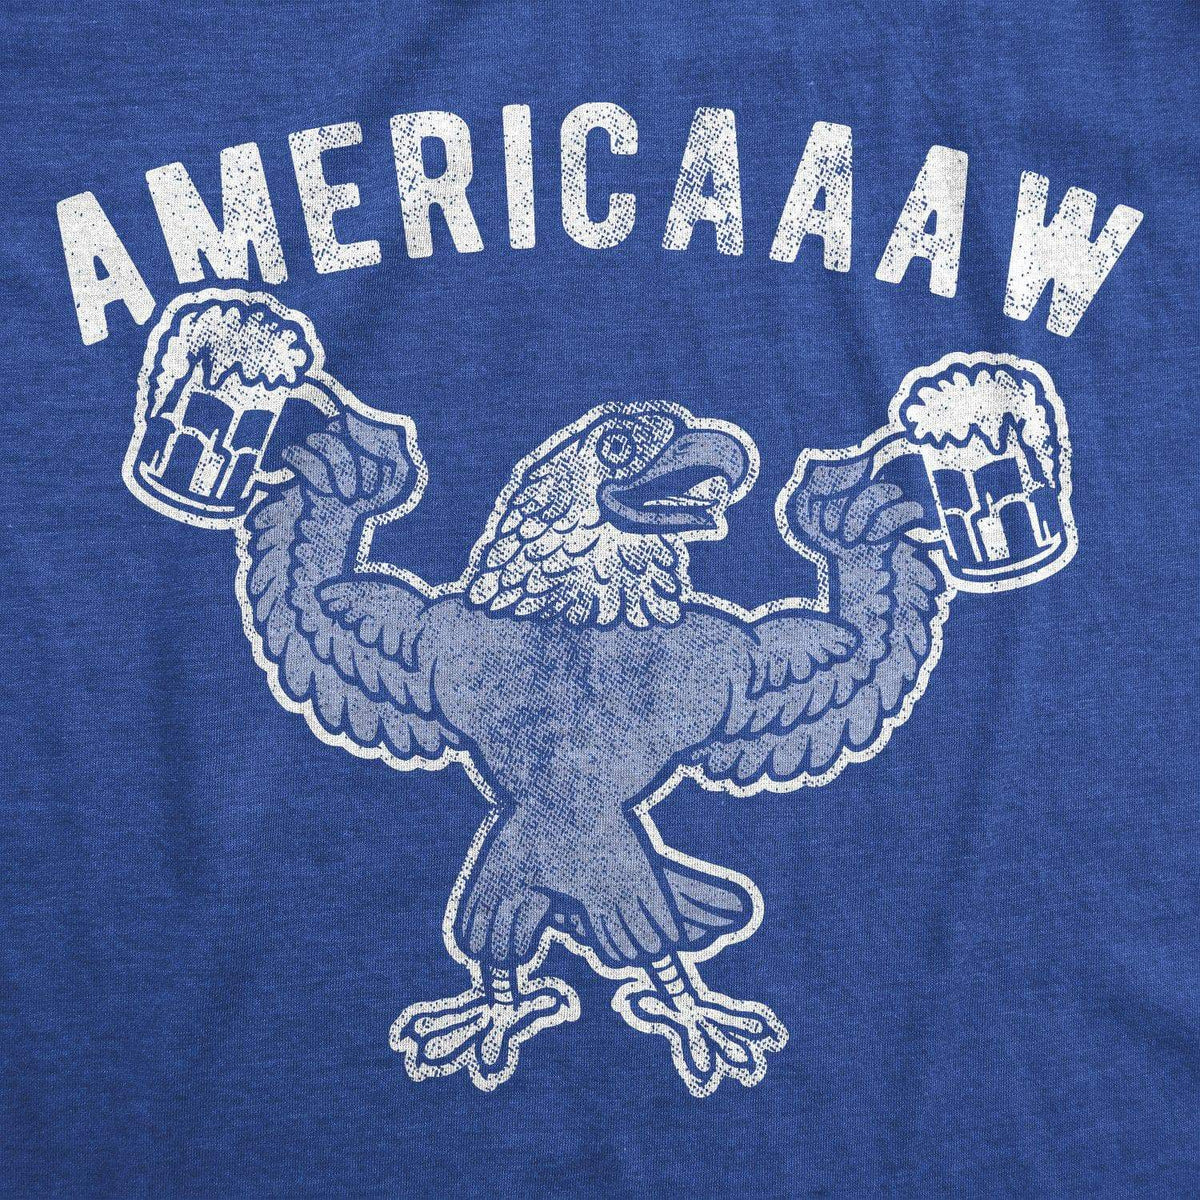 Americaaaw Men&#39;s Tshirt - Crazy Dog T-Shirts